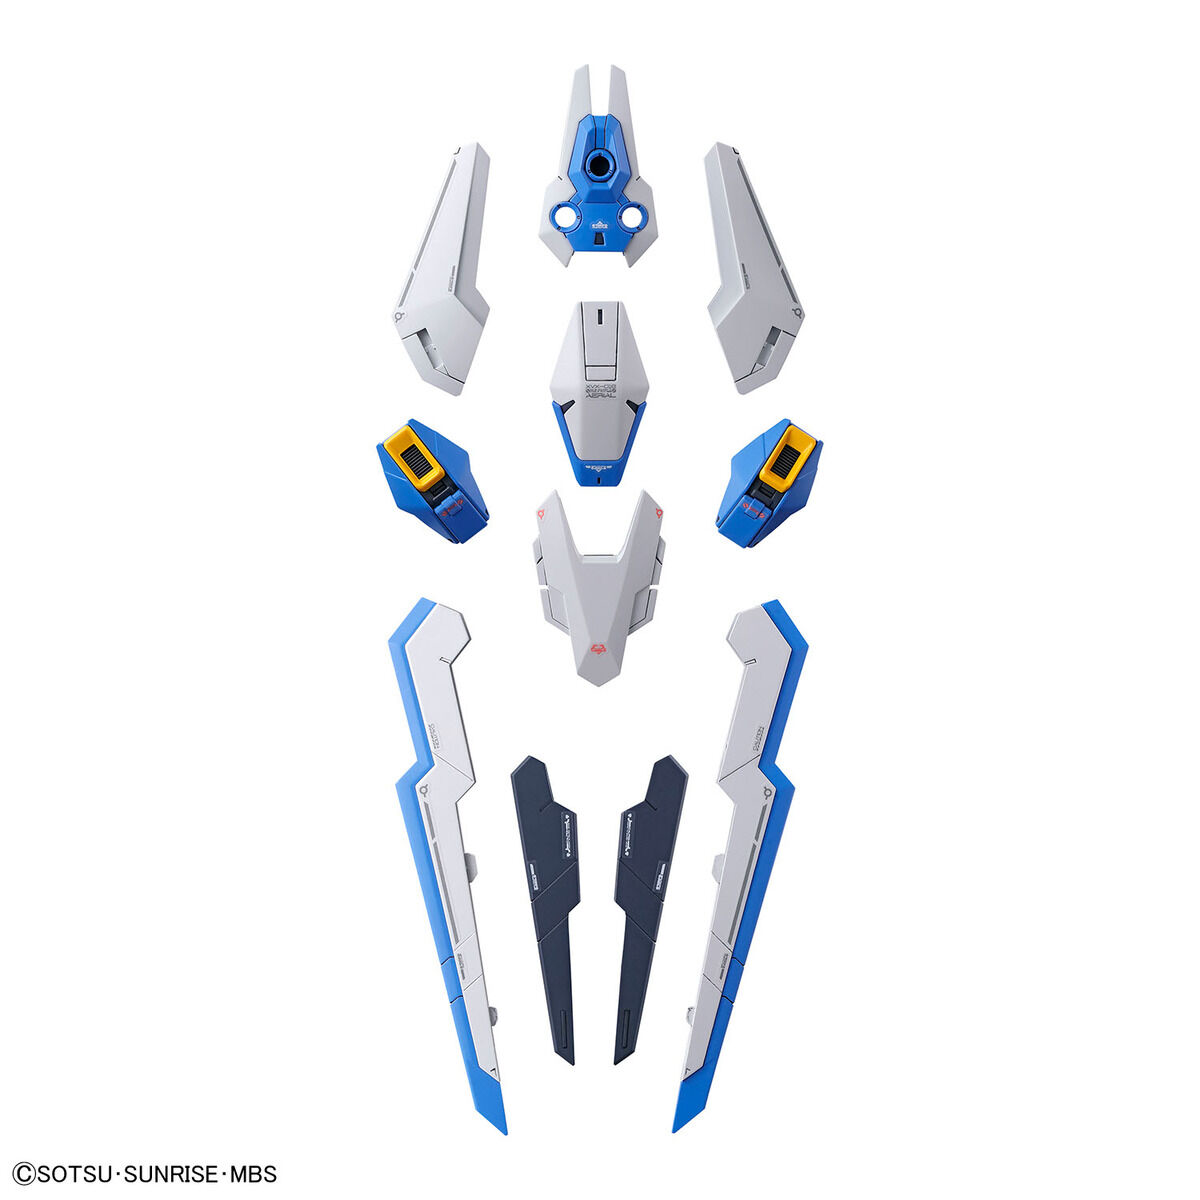 Full Mechanics 1/100 Gundam Aerial (July & August Ship Date)